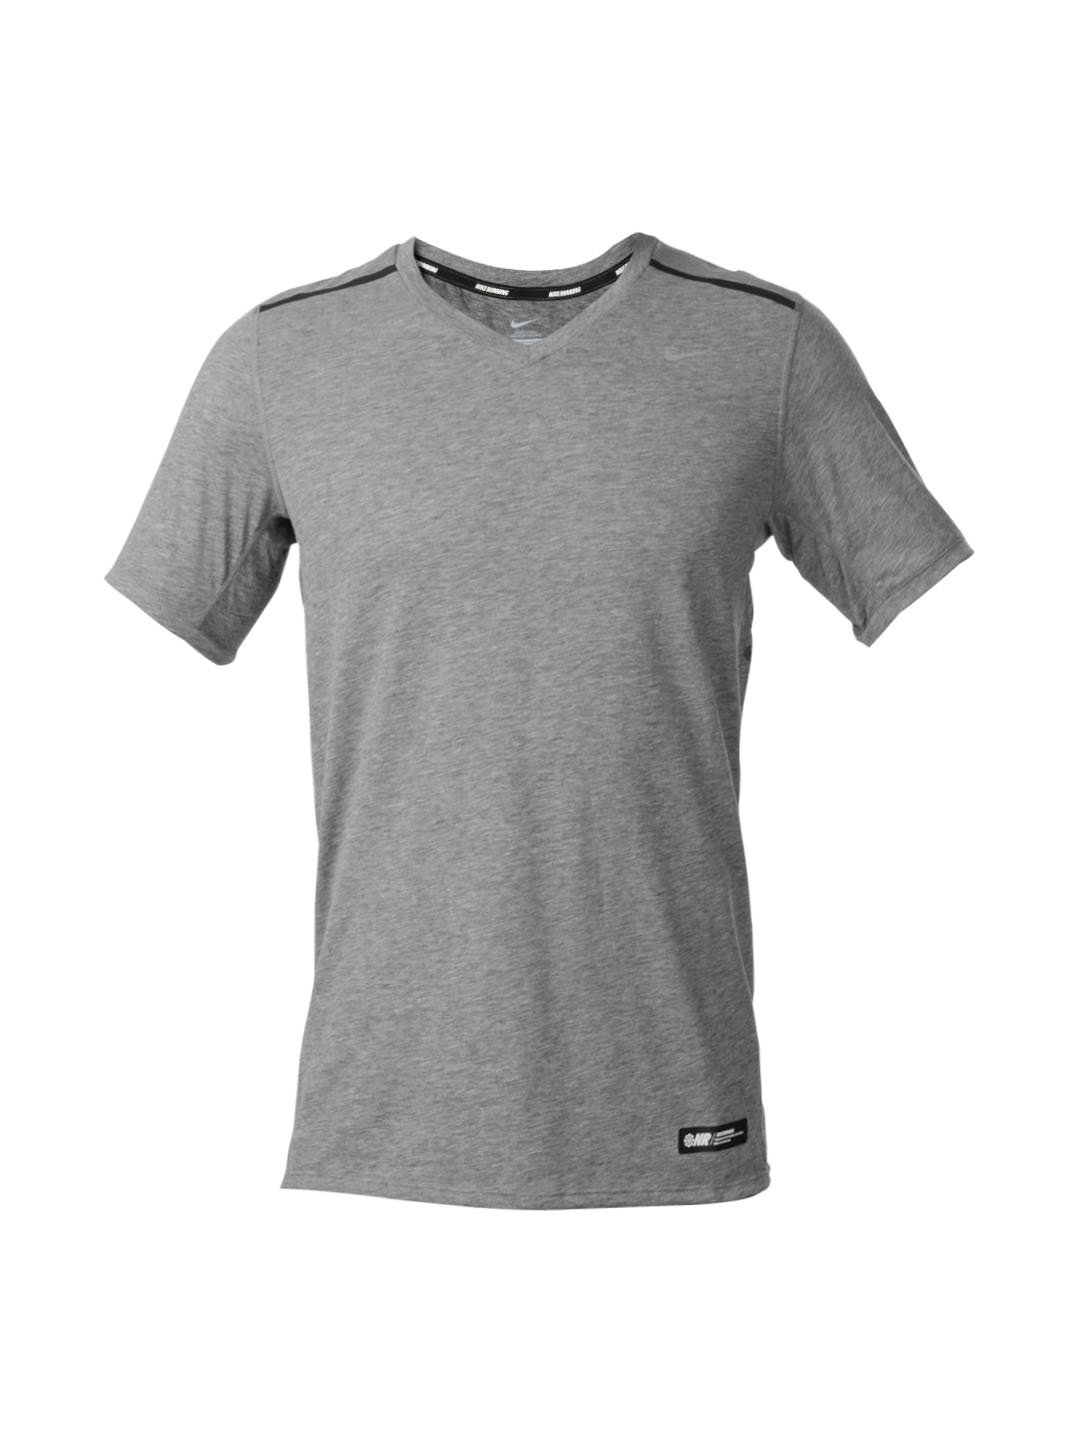 Nike-Men-Grey-T-shirt_f34be3b2f7d800a3bc7583b8b110b1c5_images_1080_1440_mini.jpg